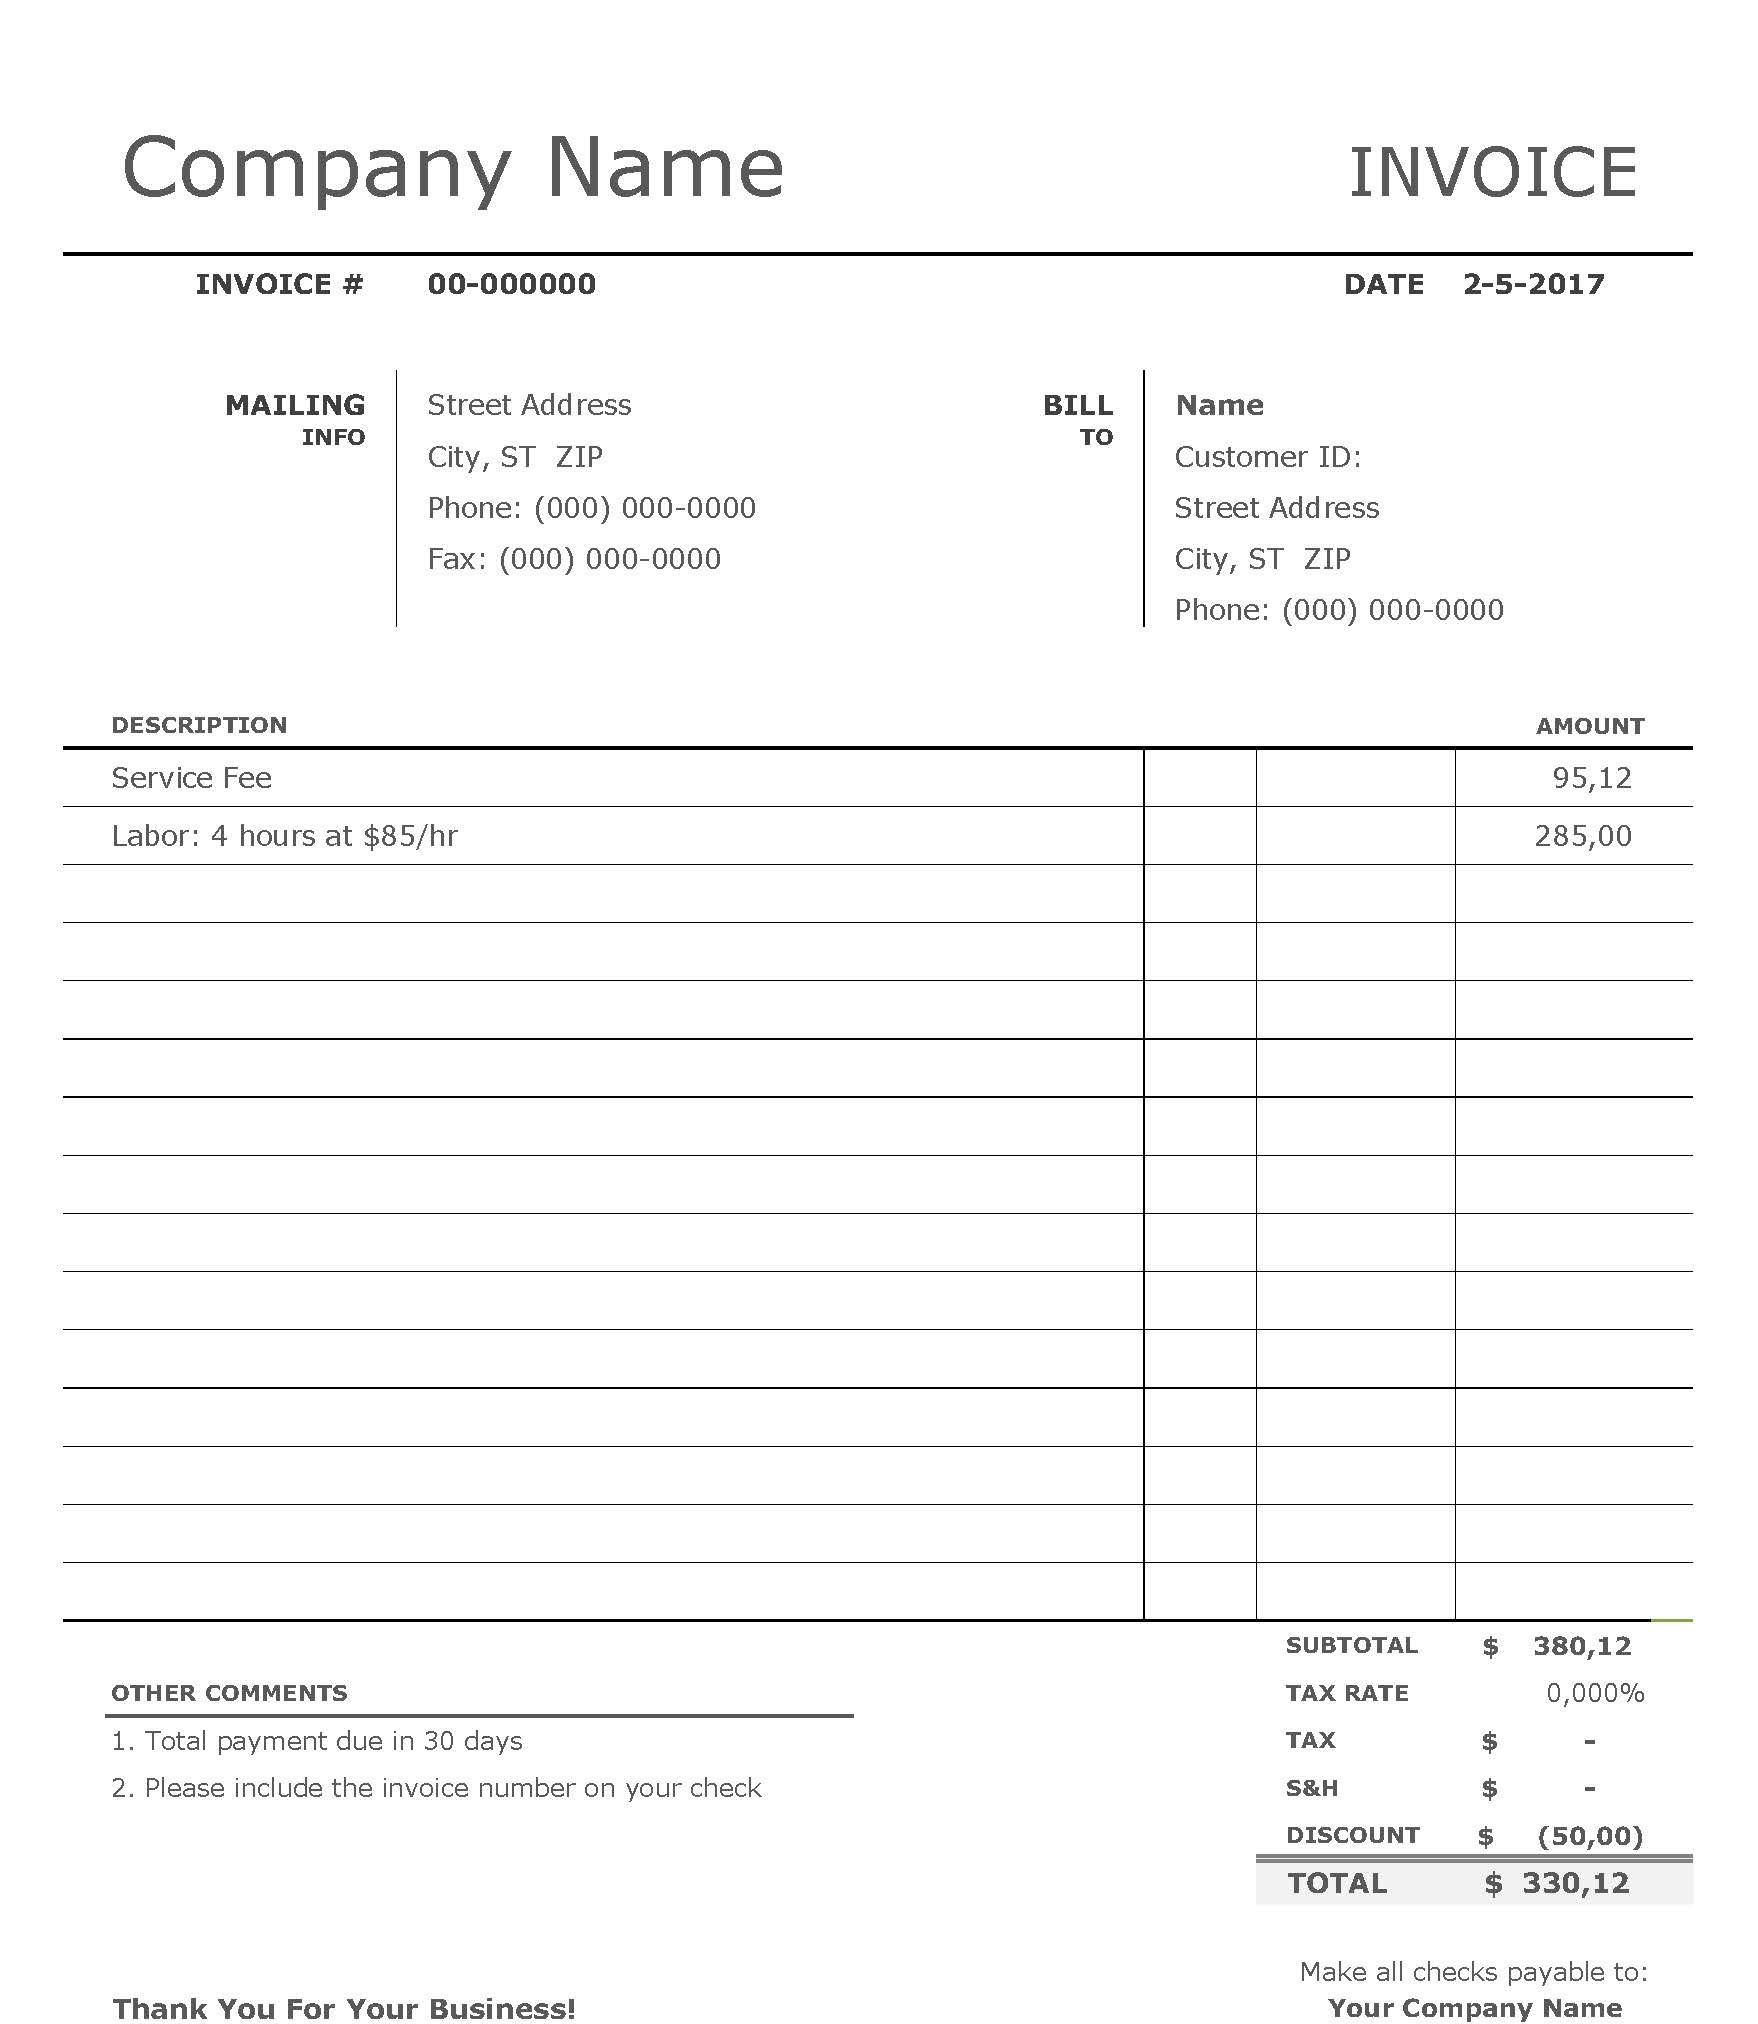 Basic Invoice Template Templates At Allbusinesstemplates